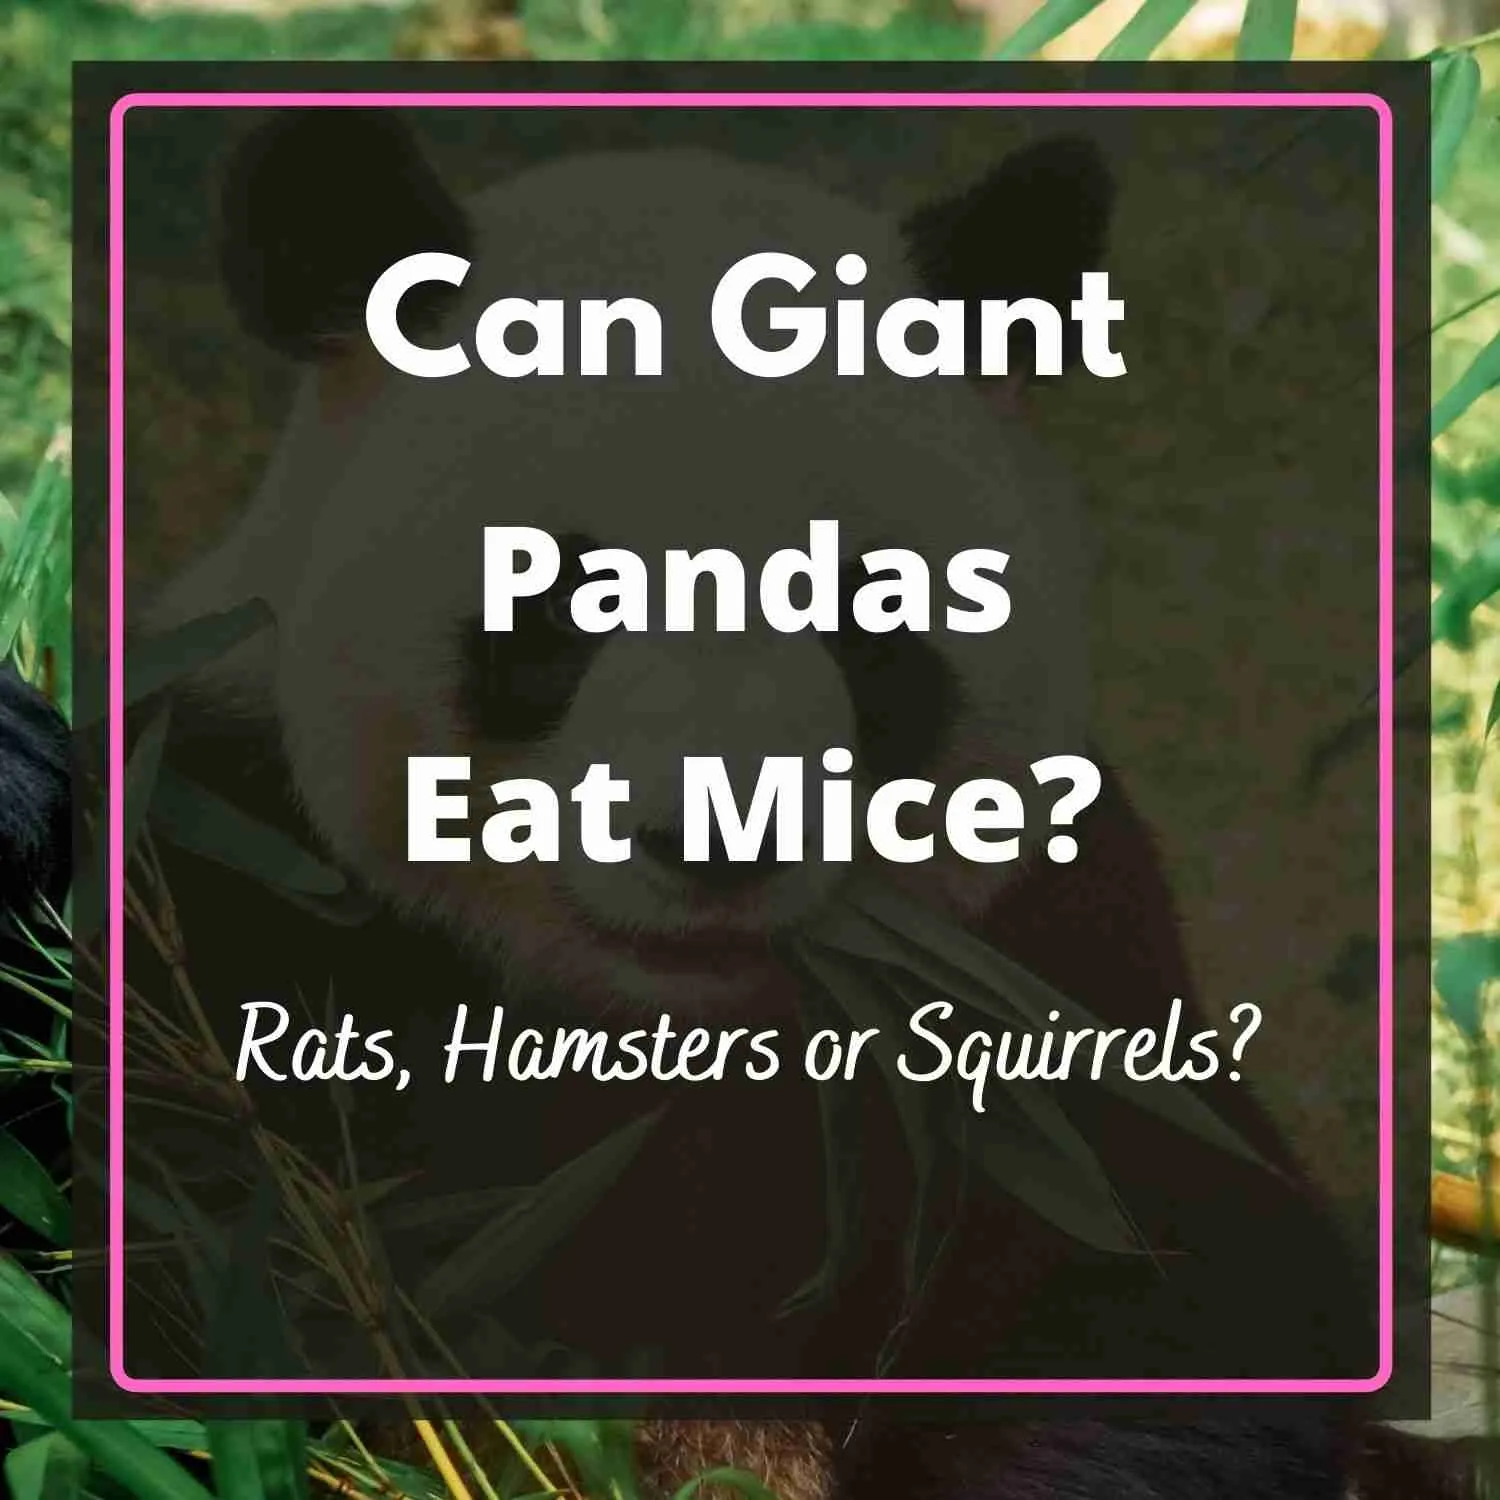 Can Giant Pandas Eat Mice